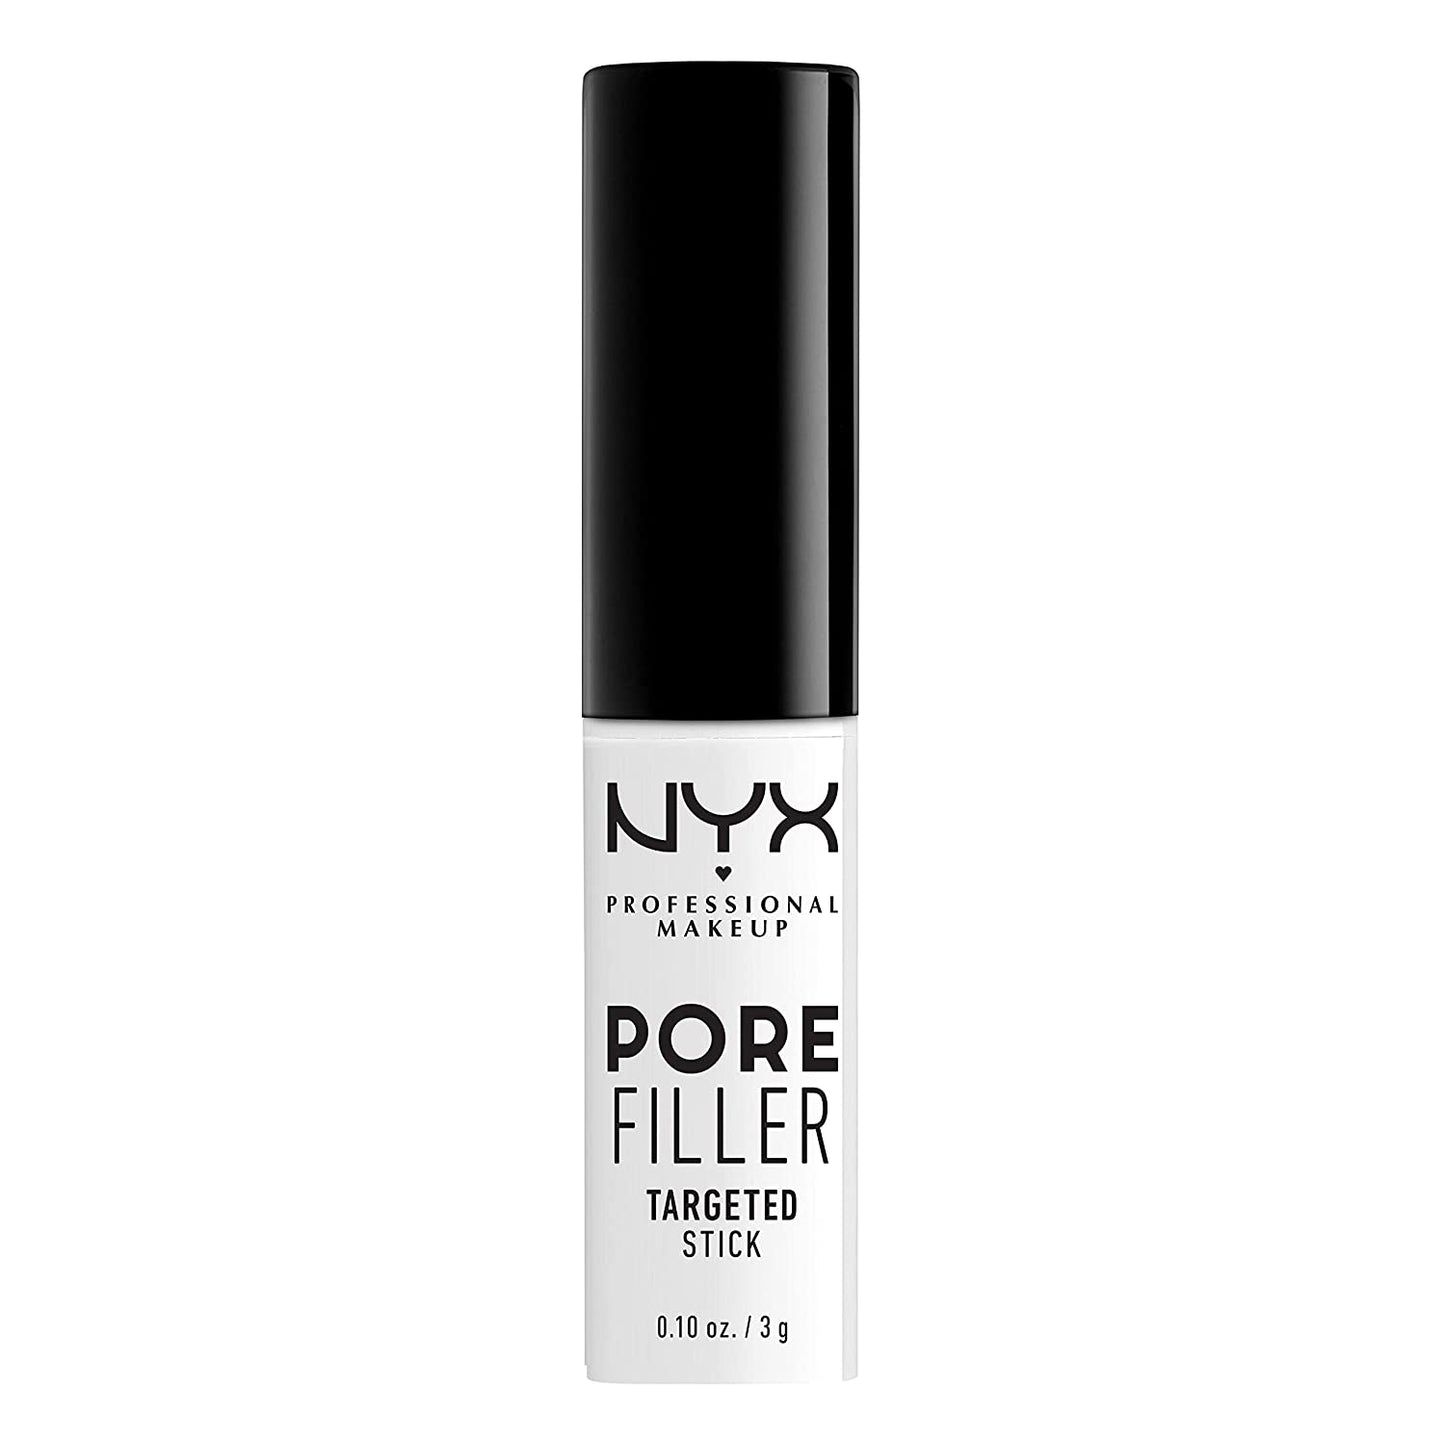 Nyx Professional Makeup Pore Filler Targeted Stick 0.10 oz. / 3g